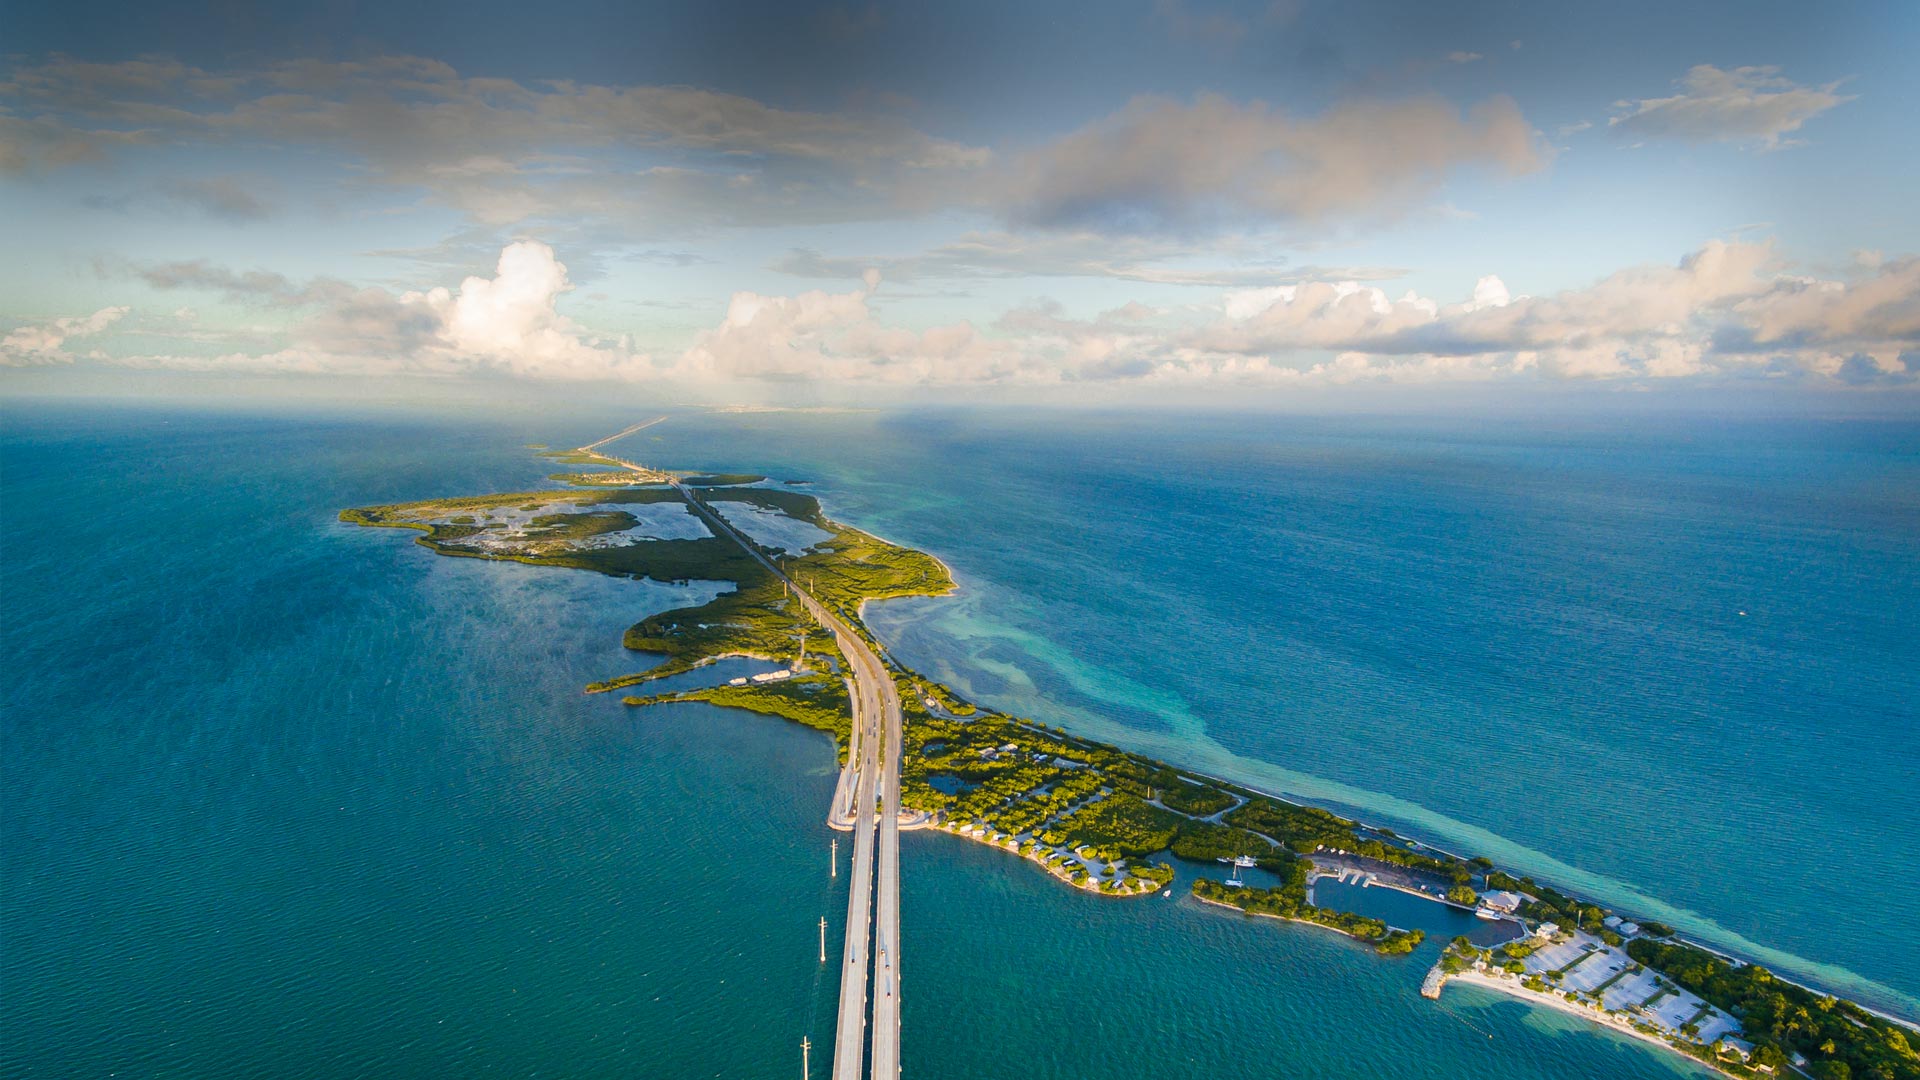 Seven Mile Bridge in the Florida Keys